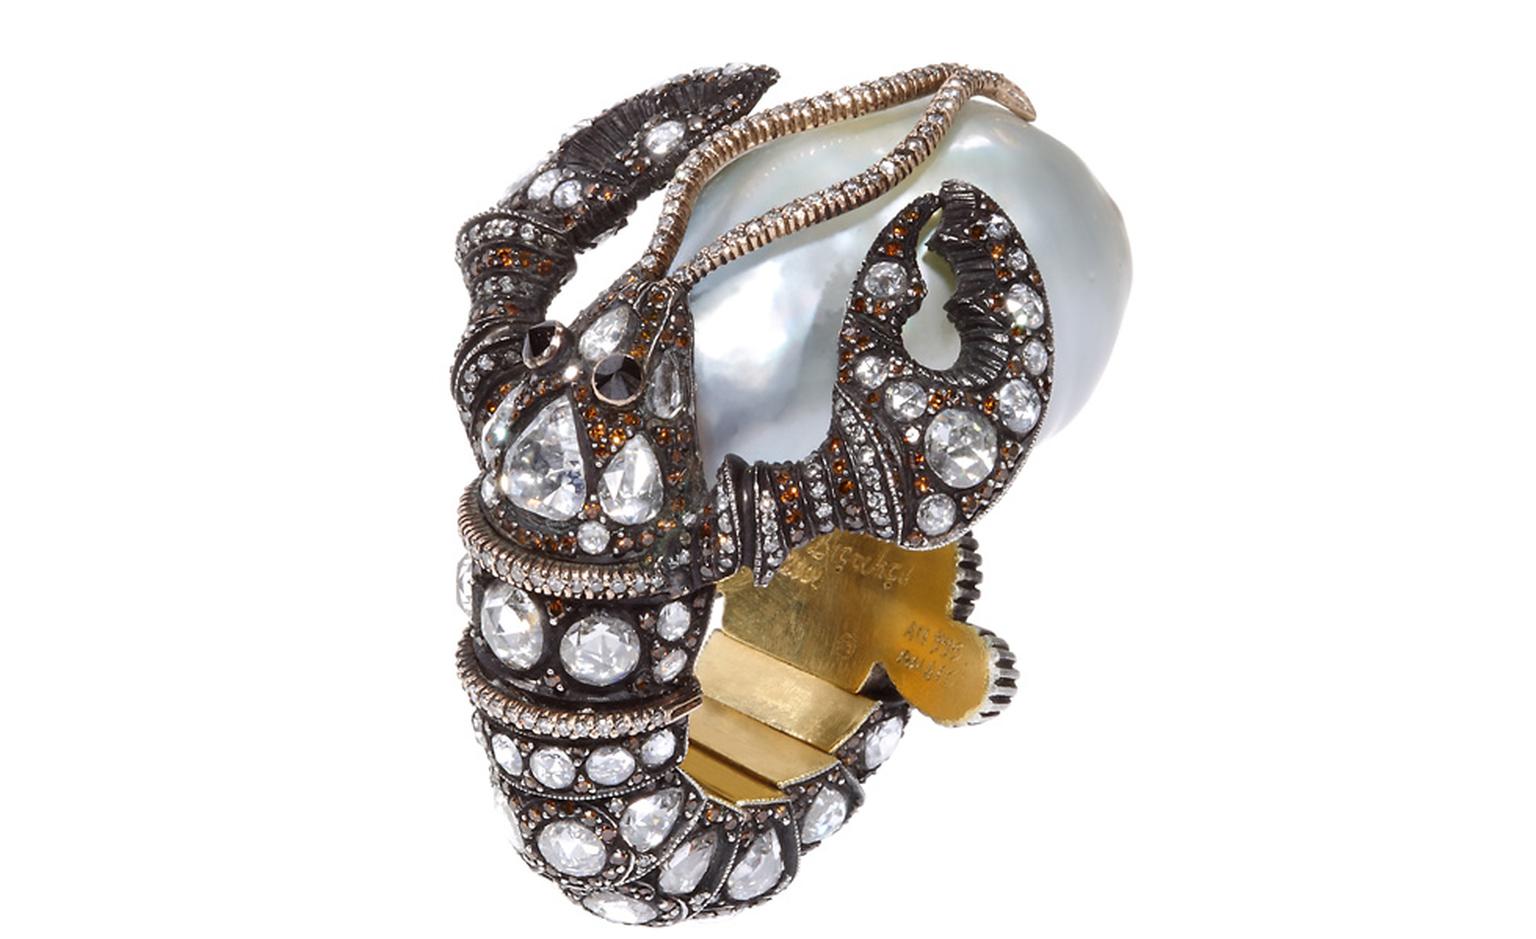 A lobster cradling a baroque pearl slips onto the finger in this Sevan Biçakçi ring.